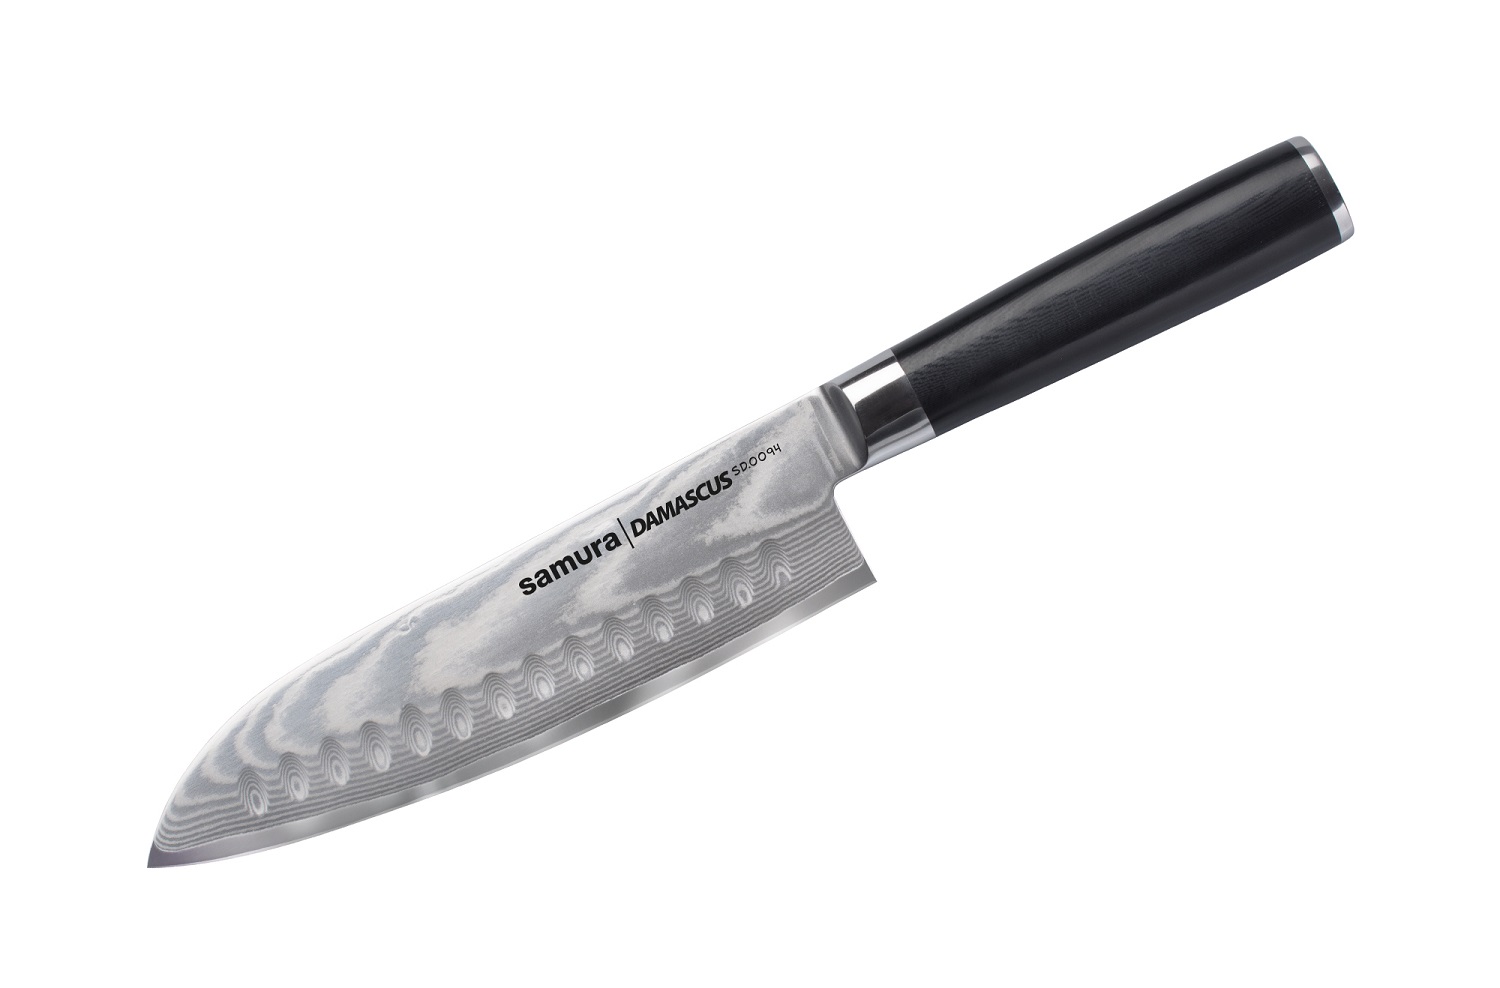 Нож Samura сантоку Damascus, 18 см, G-10, дамаск 67 слоев нож samura damascus шеф 20 см g 10 дамаск 67 слоев